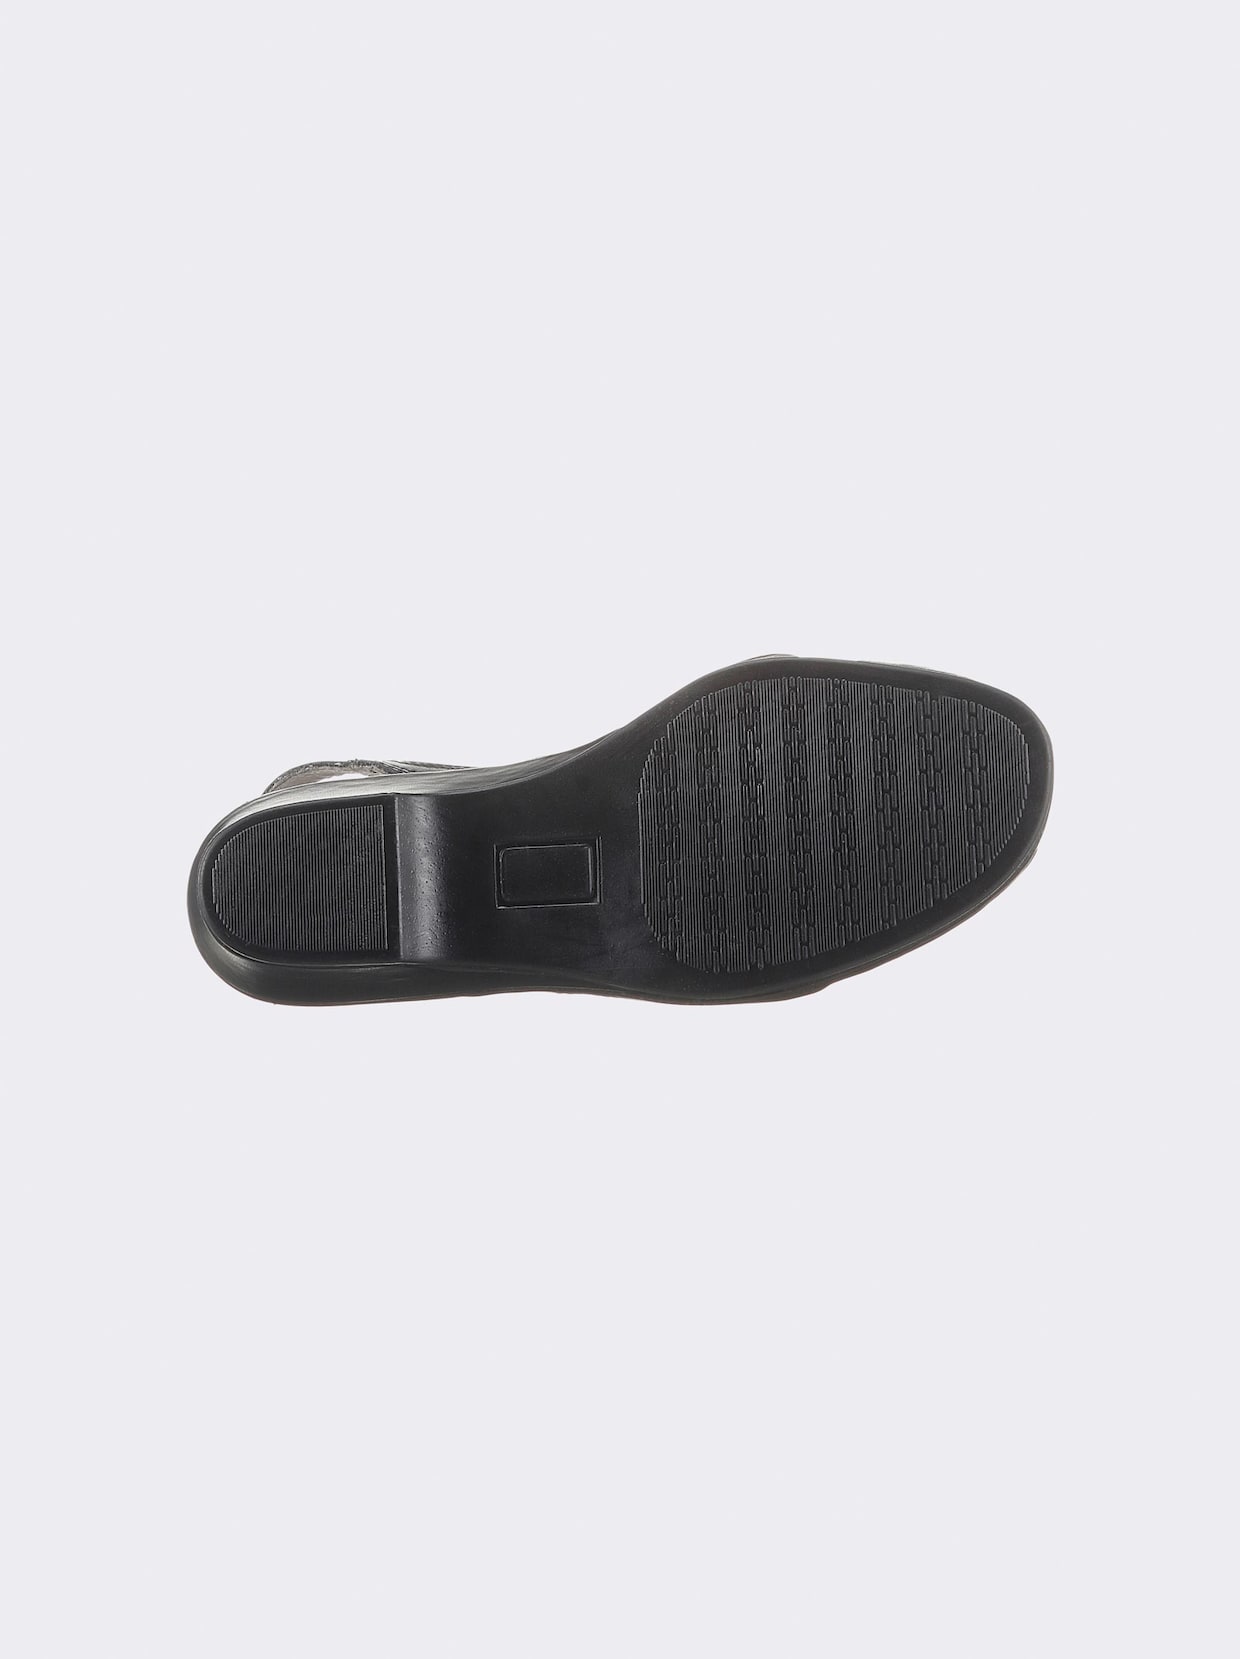 ACO Sandalette - schwarz